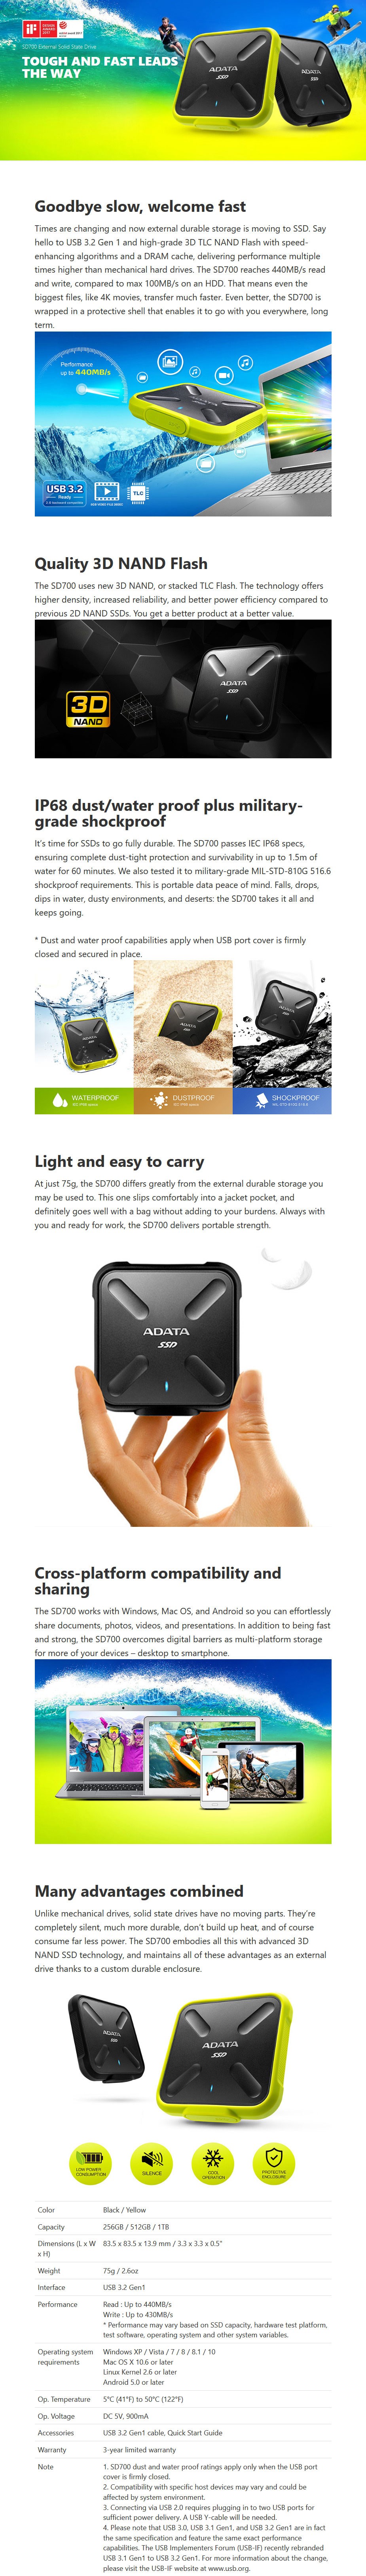 adata-sd700-256gb-usb-31-portable-external-rugged-ssd-hard-drive-black-ac32186-4-1-.jpg